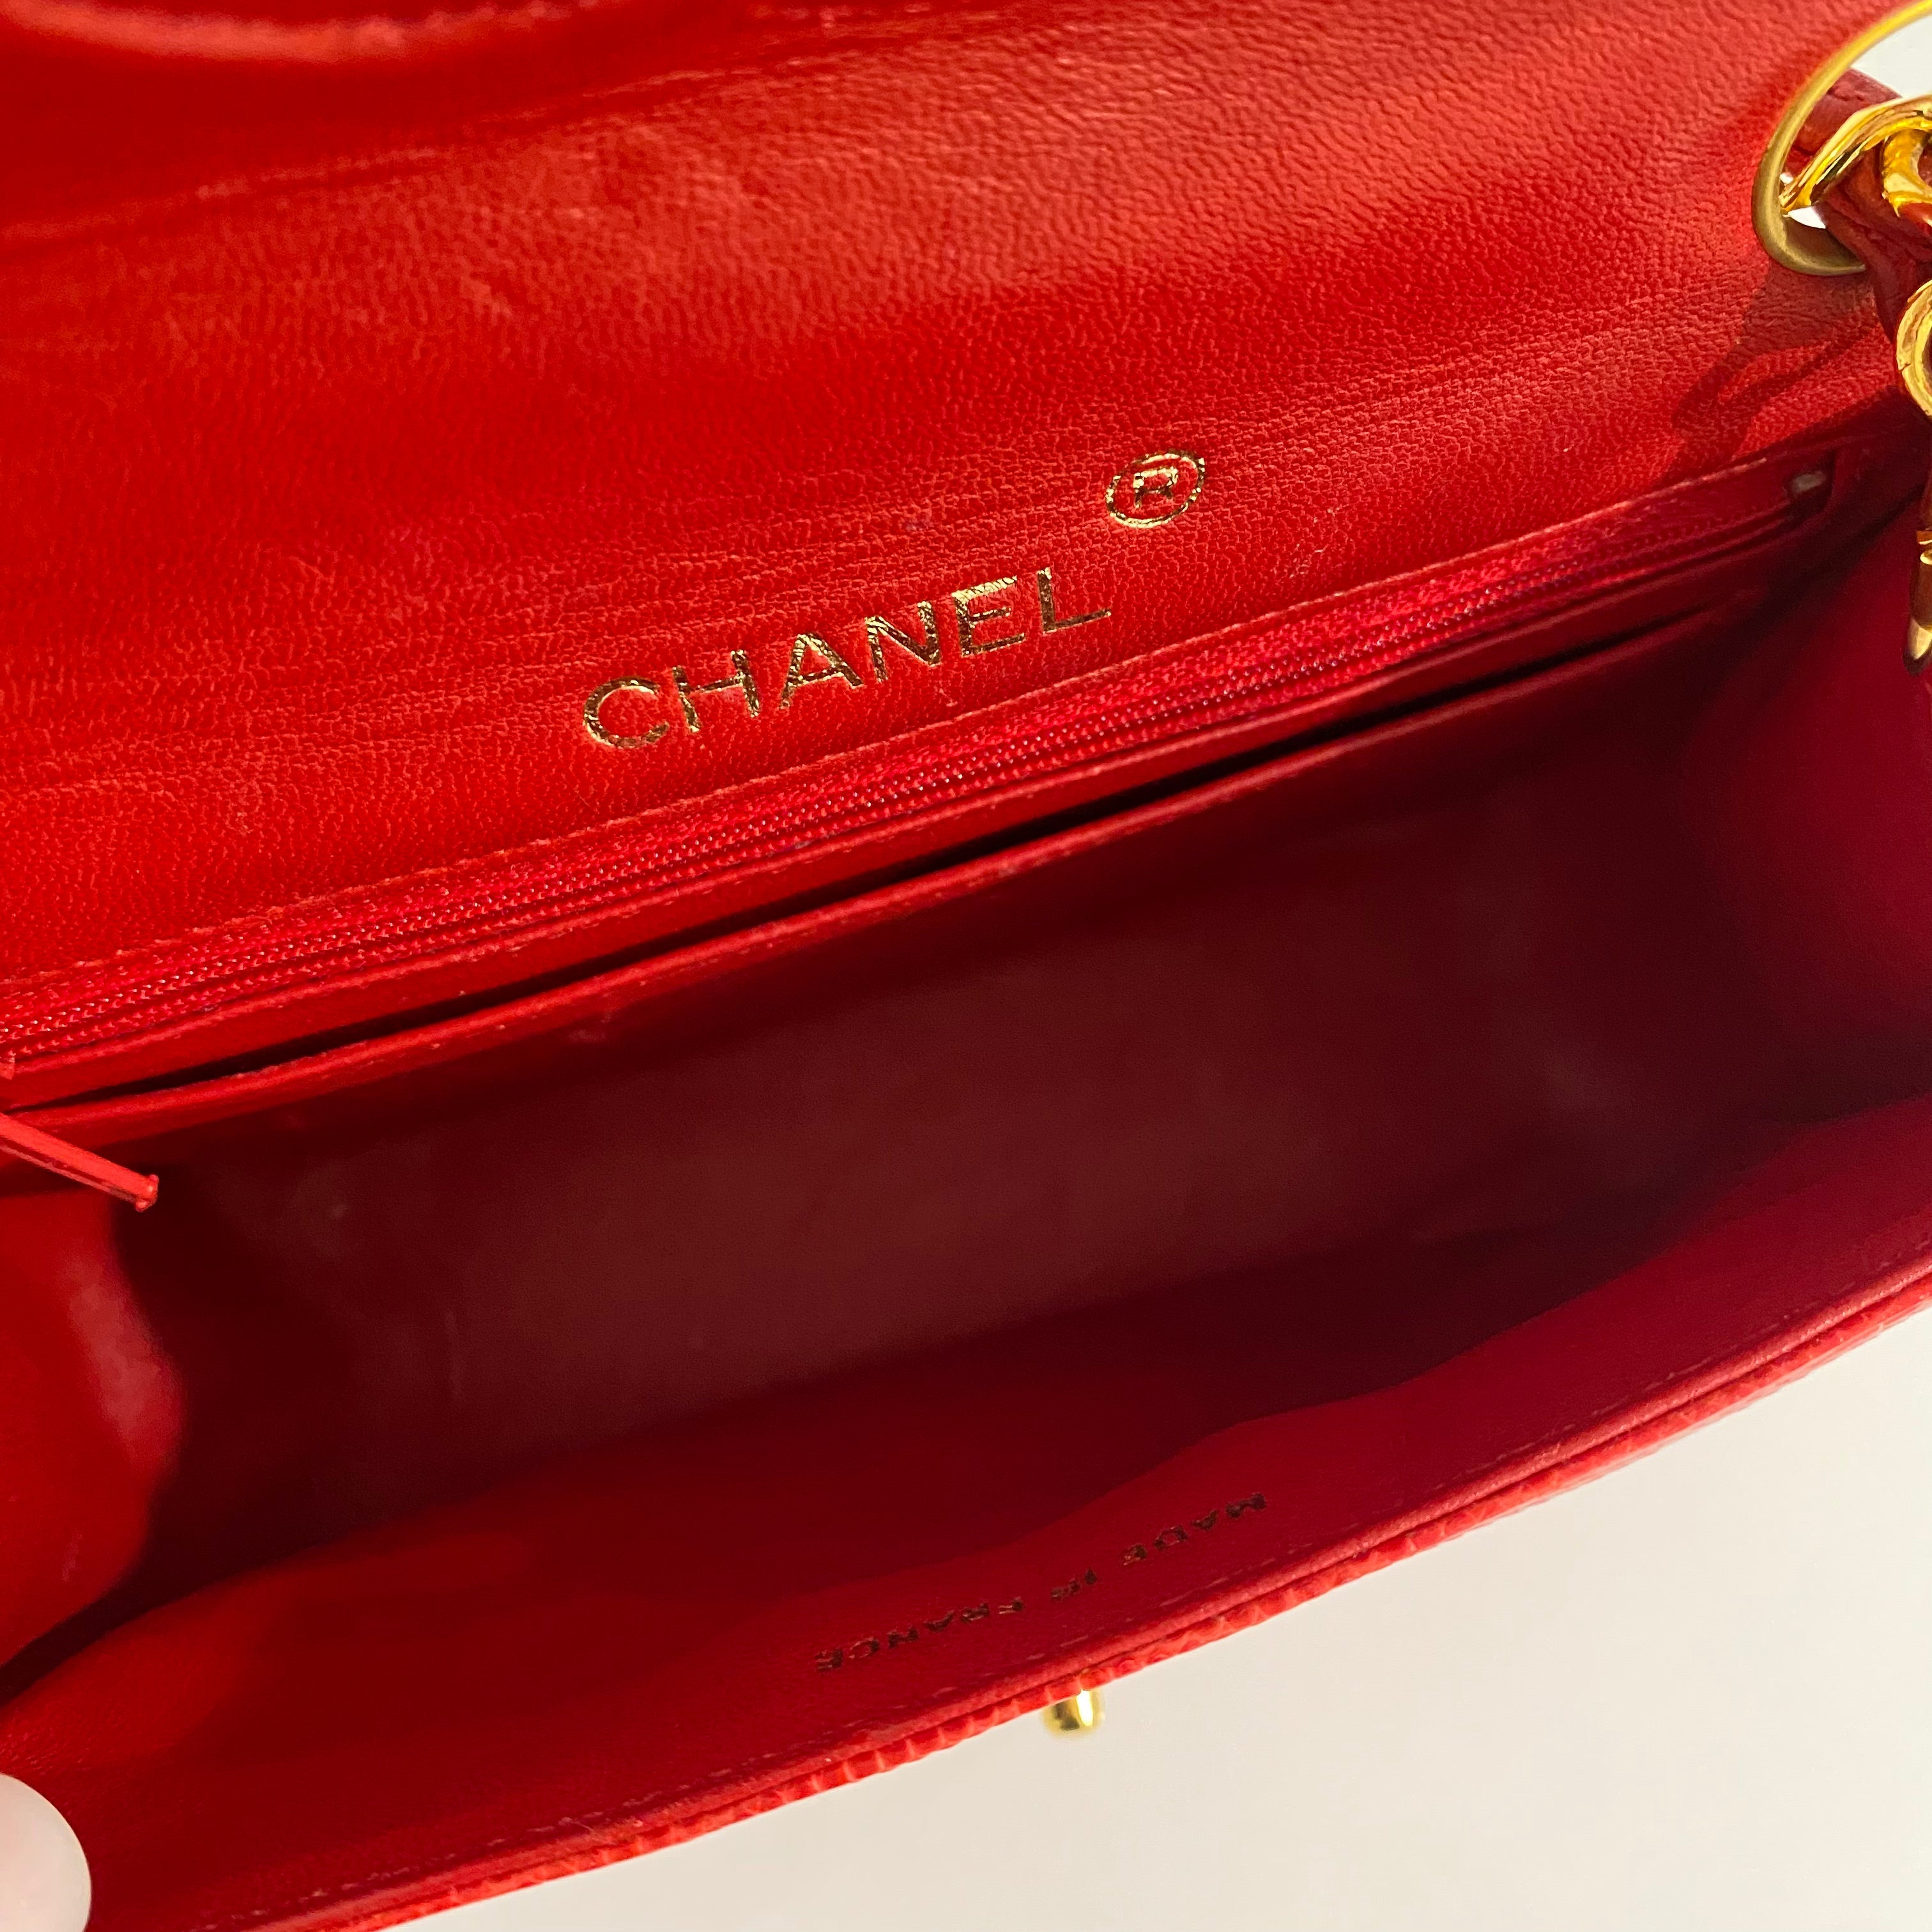 Chanel red hobo bag - Gem